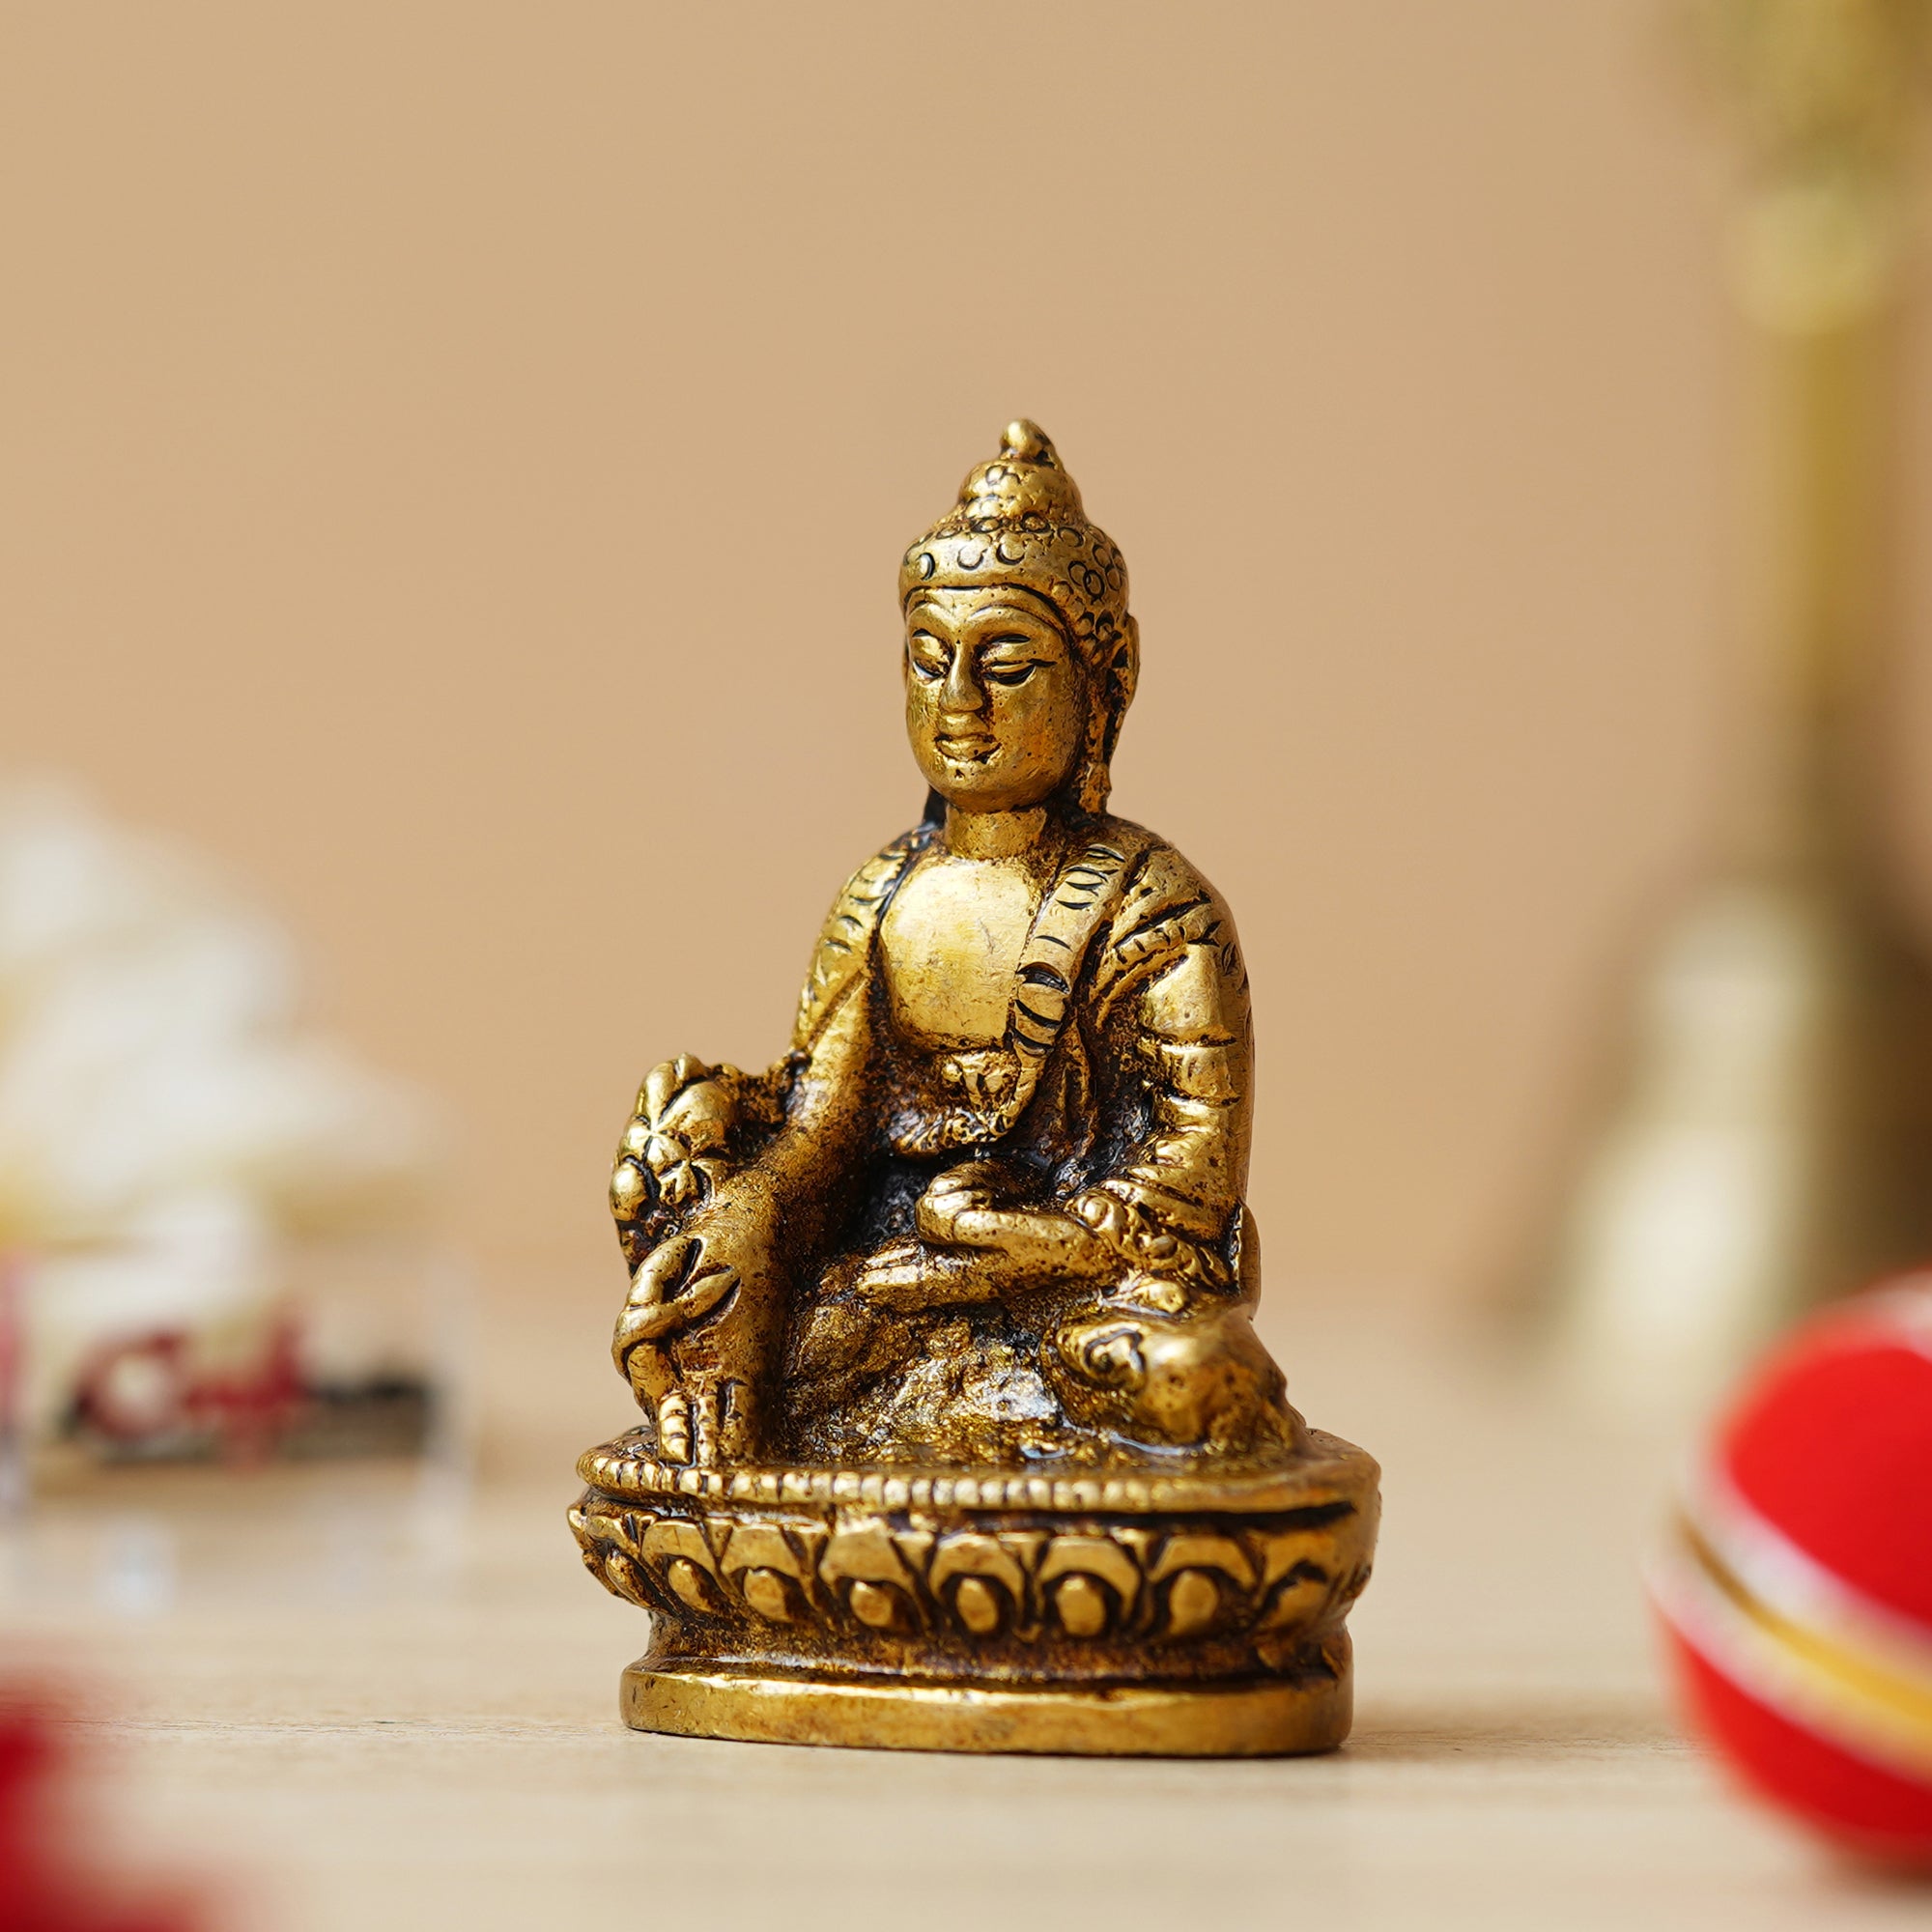 Golden Brass Lord Buddha Statue Murti Idol for Home Decor, Living Room, Office Desk, Car Dashboard - Buddha Purnima Gift to Bring Good Luck 4